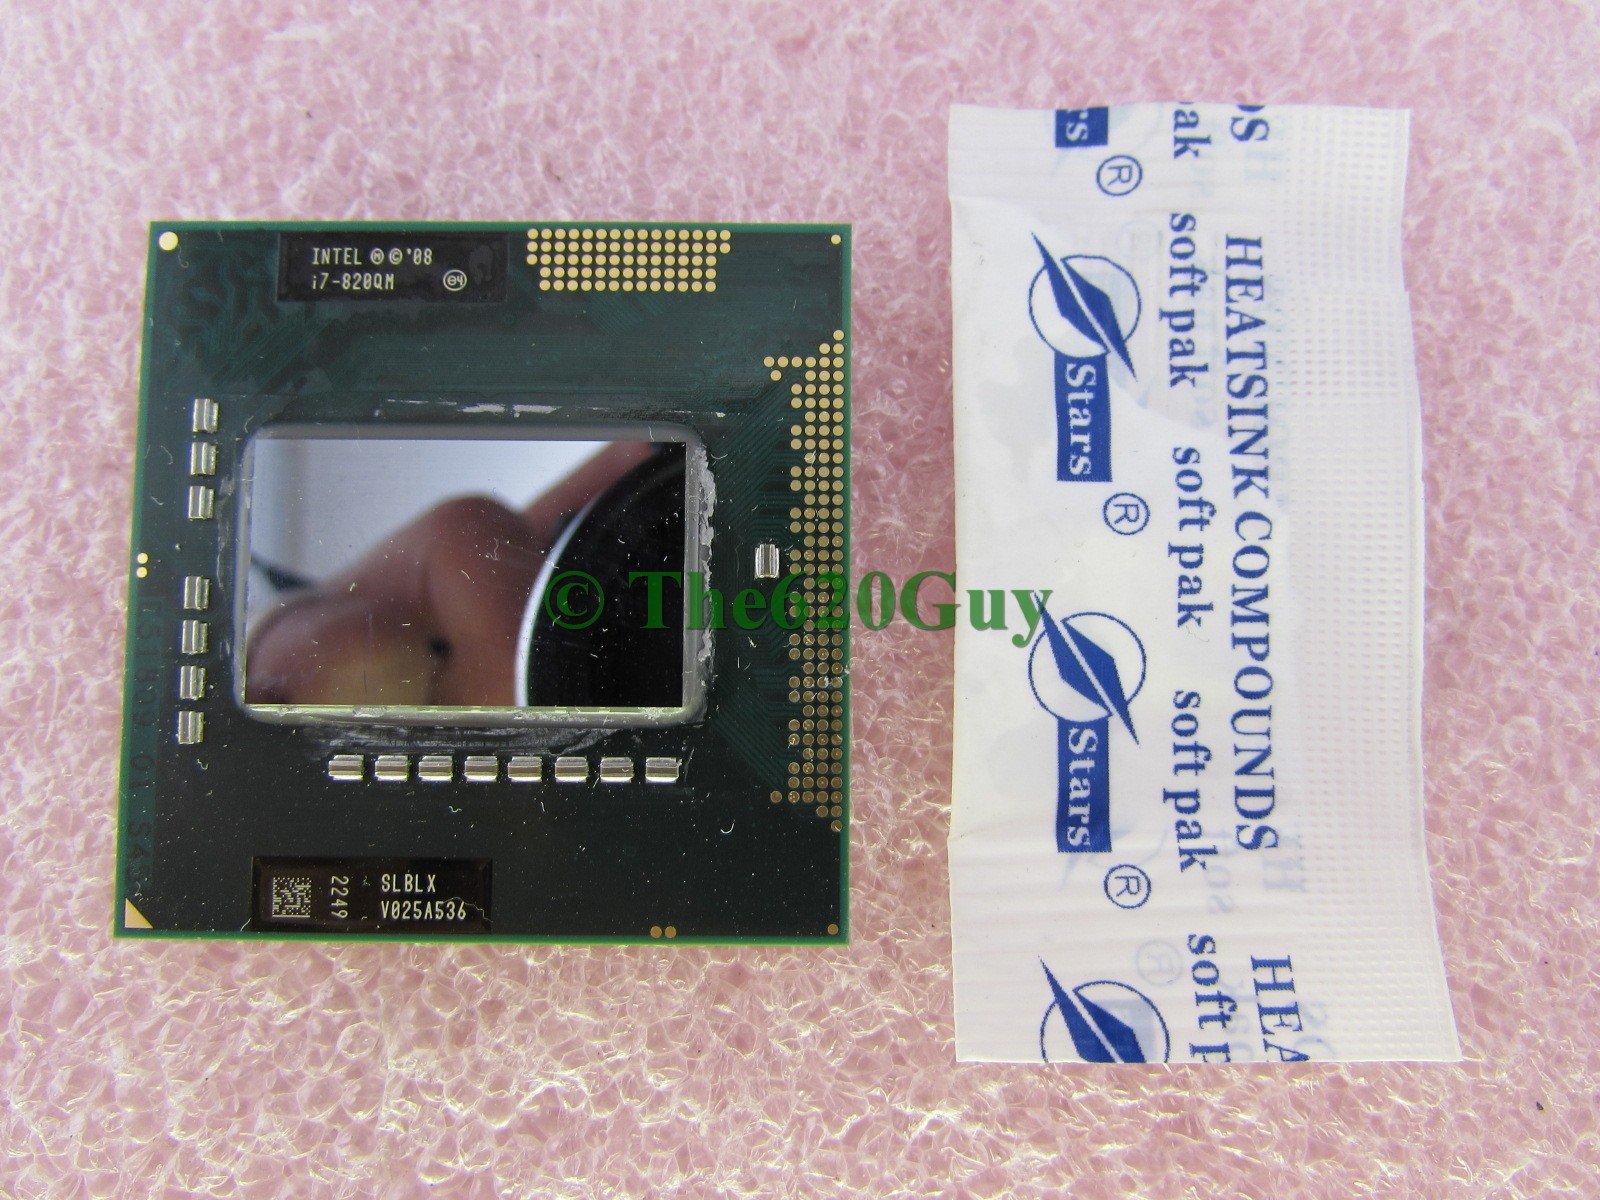 Intel Core i7-820QM 1.73GHz Quad Core 8M SLBLX Socket G1 Laptop CPU Processor +P